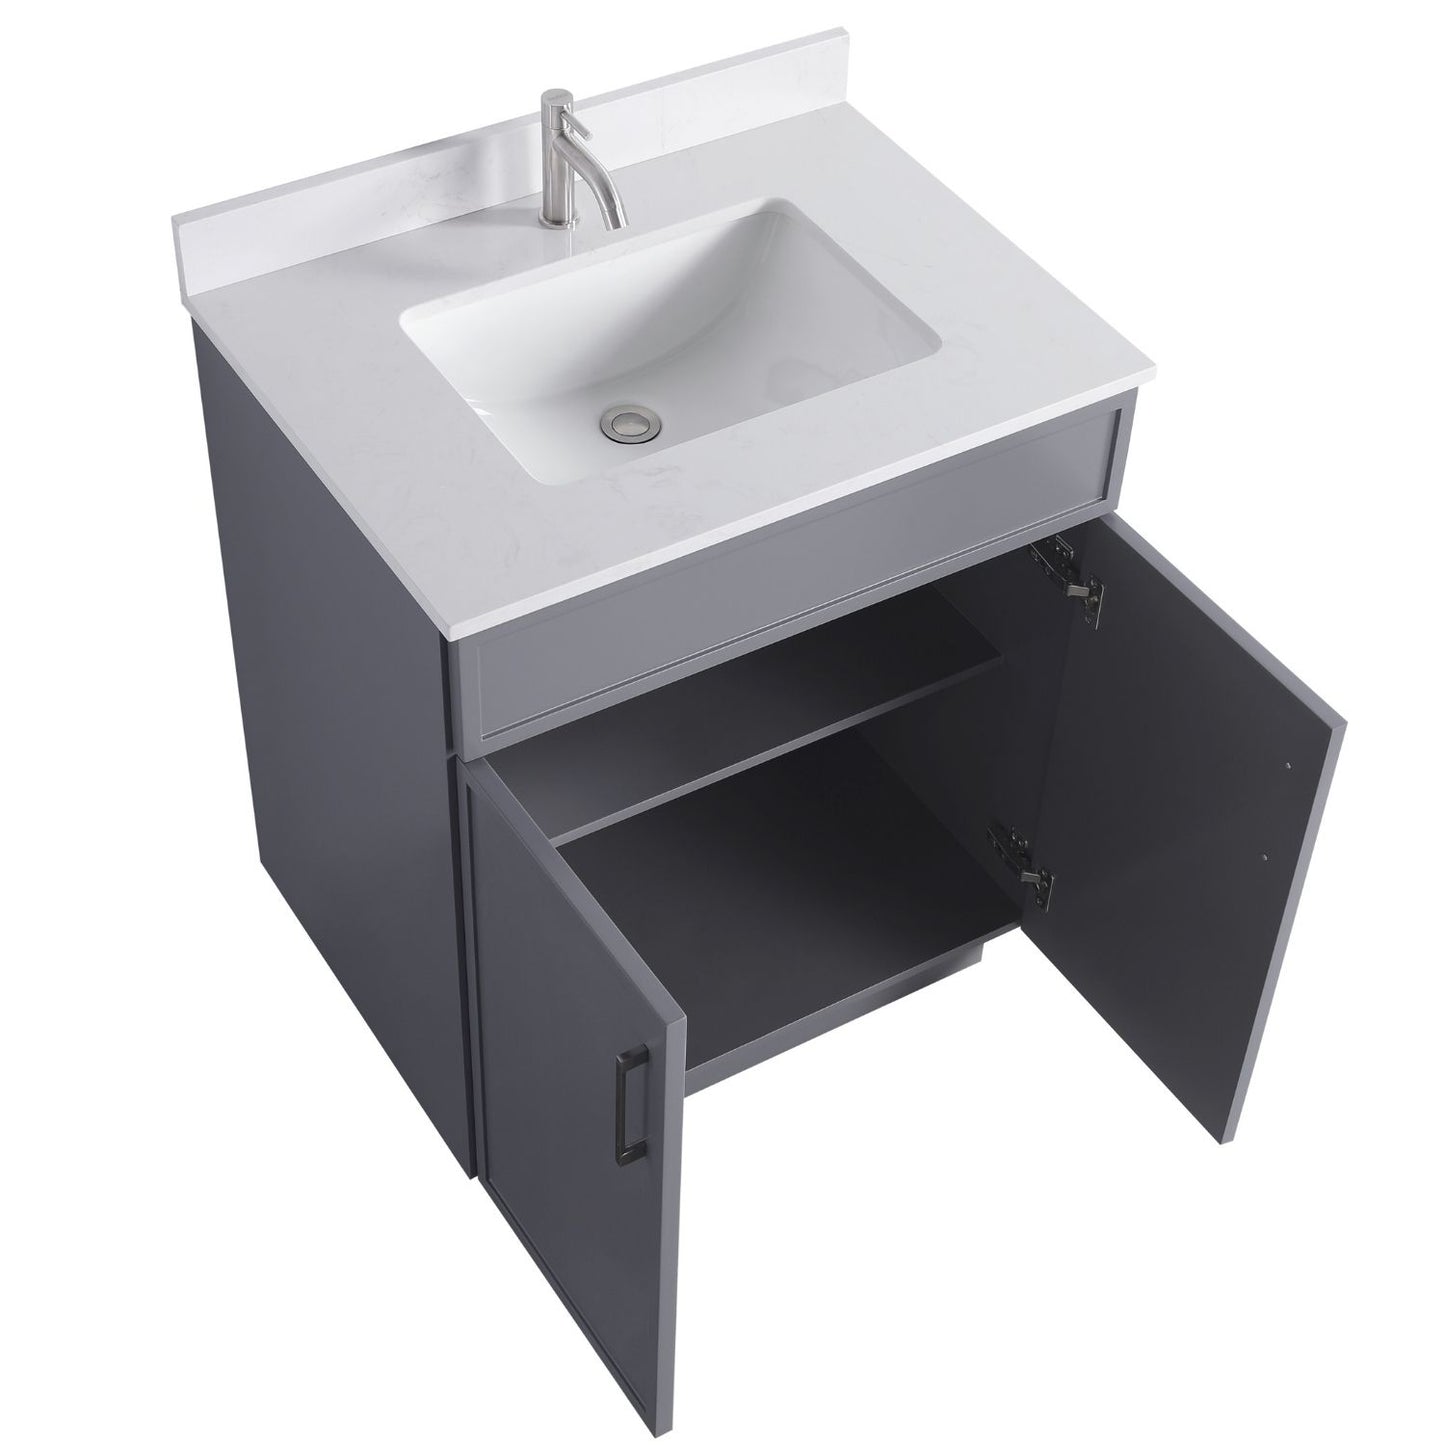 Waterpar® 30 in. L x 22 in. W x 35 in. H Minimalist Bathroom Cabinet with Single Ceramic Sink